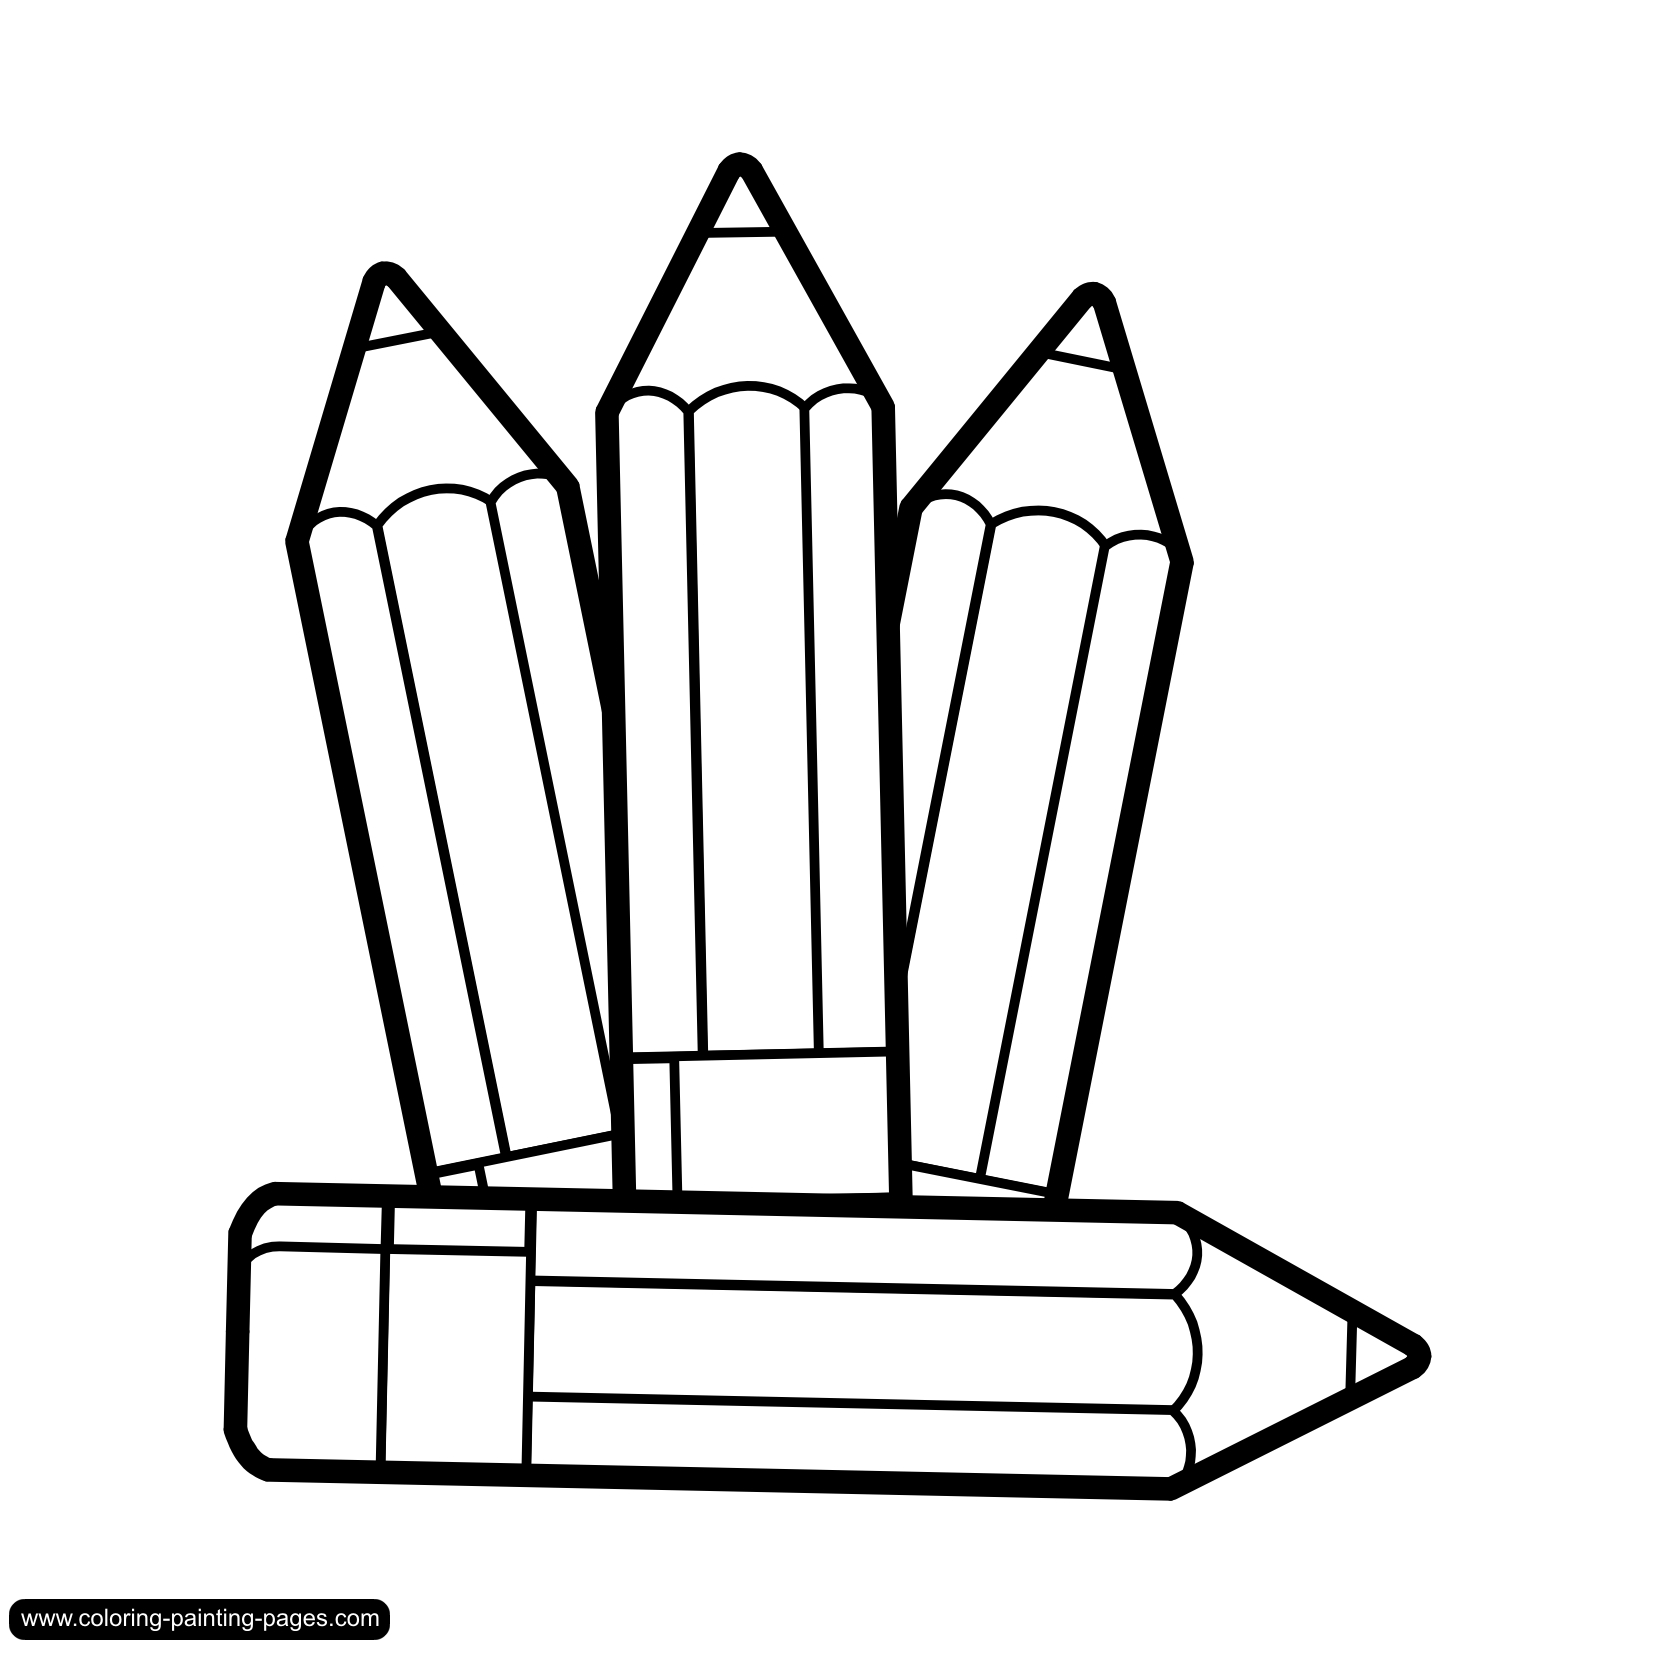 Pencil black and white marker clipart black and white pencil